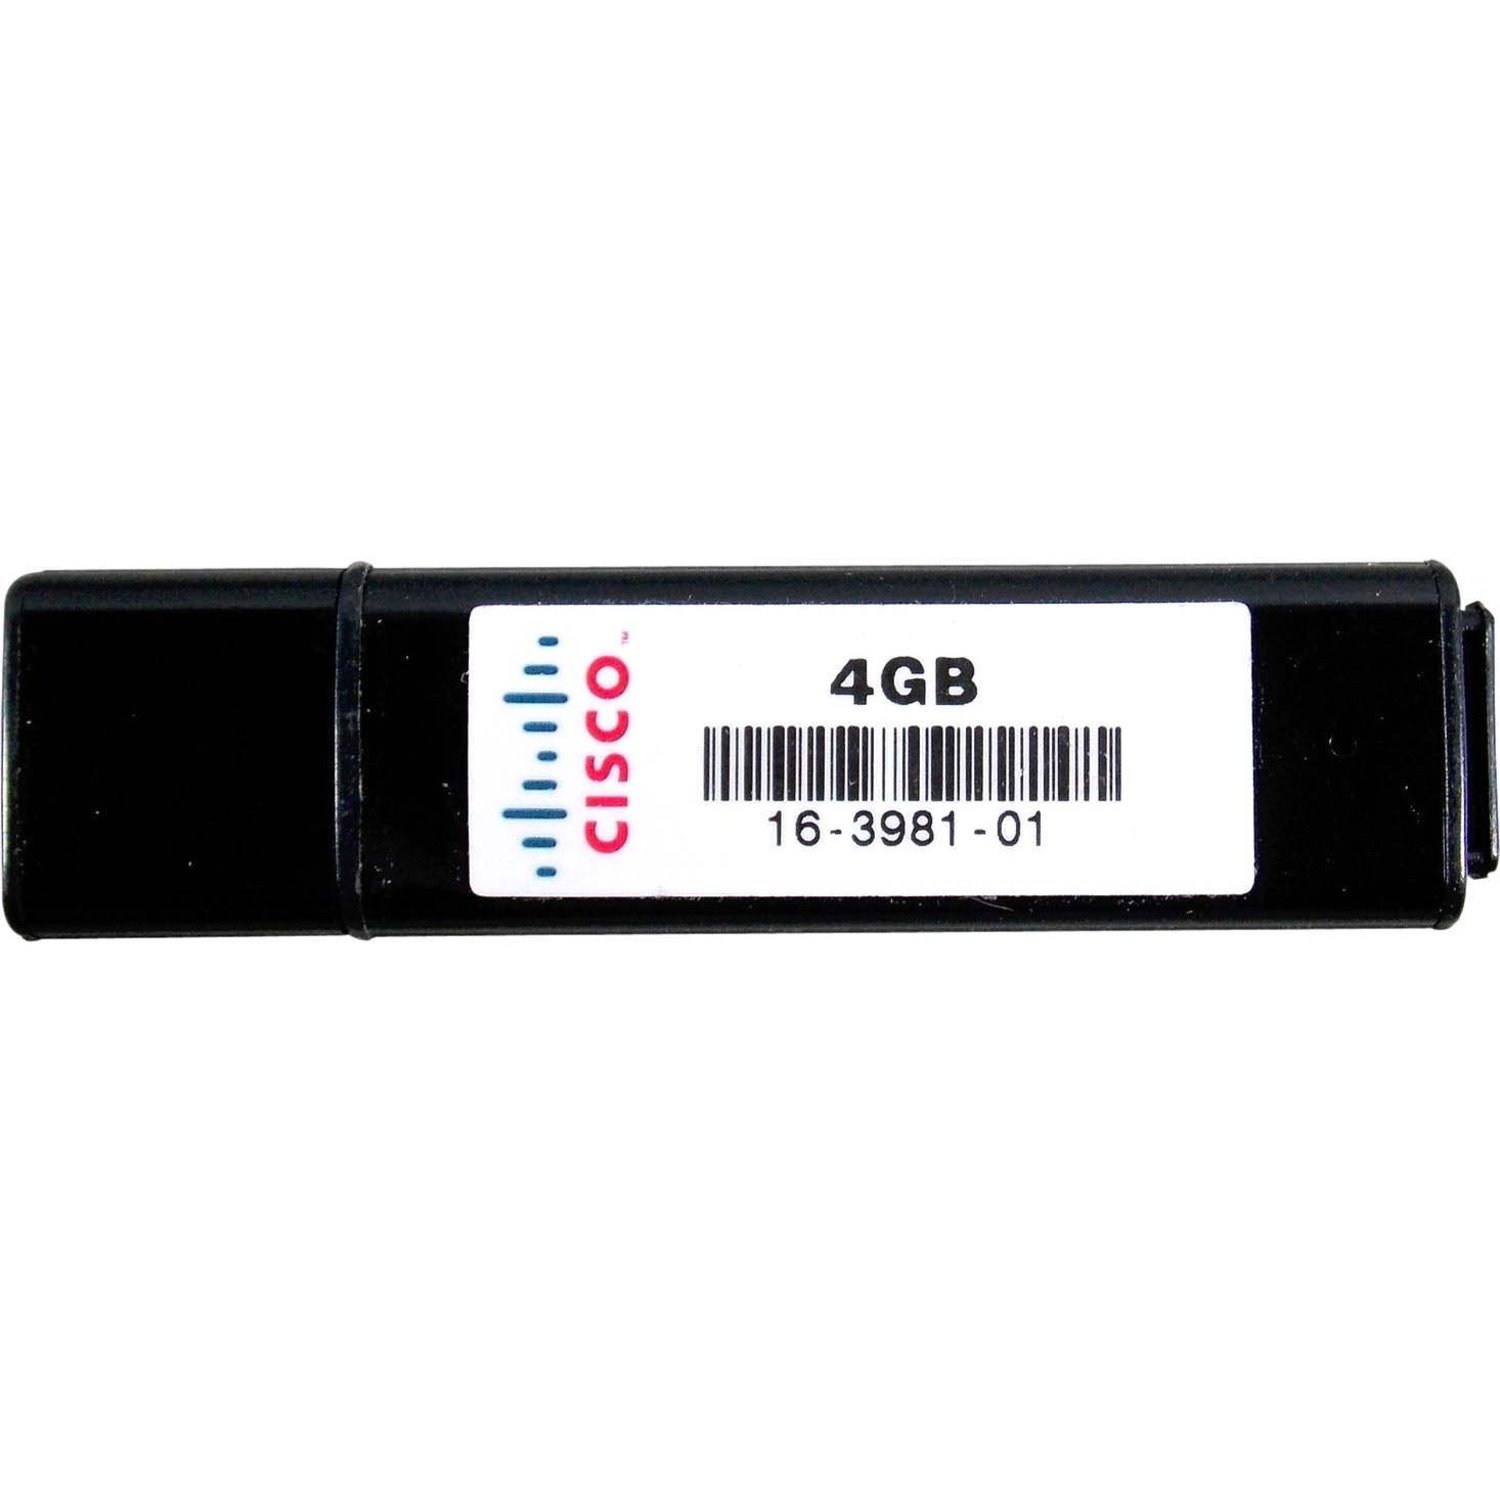 Cisco 4GB USB Flash Drive